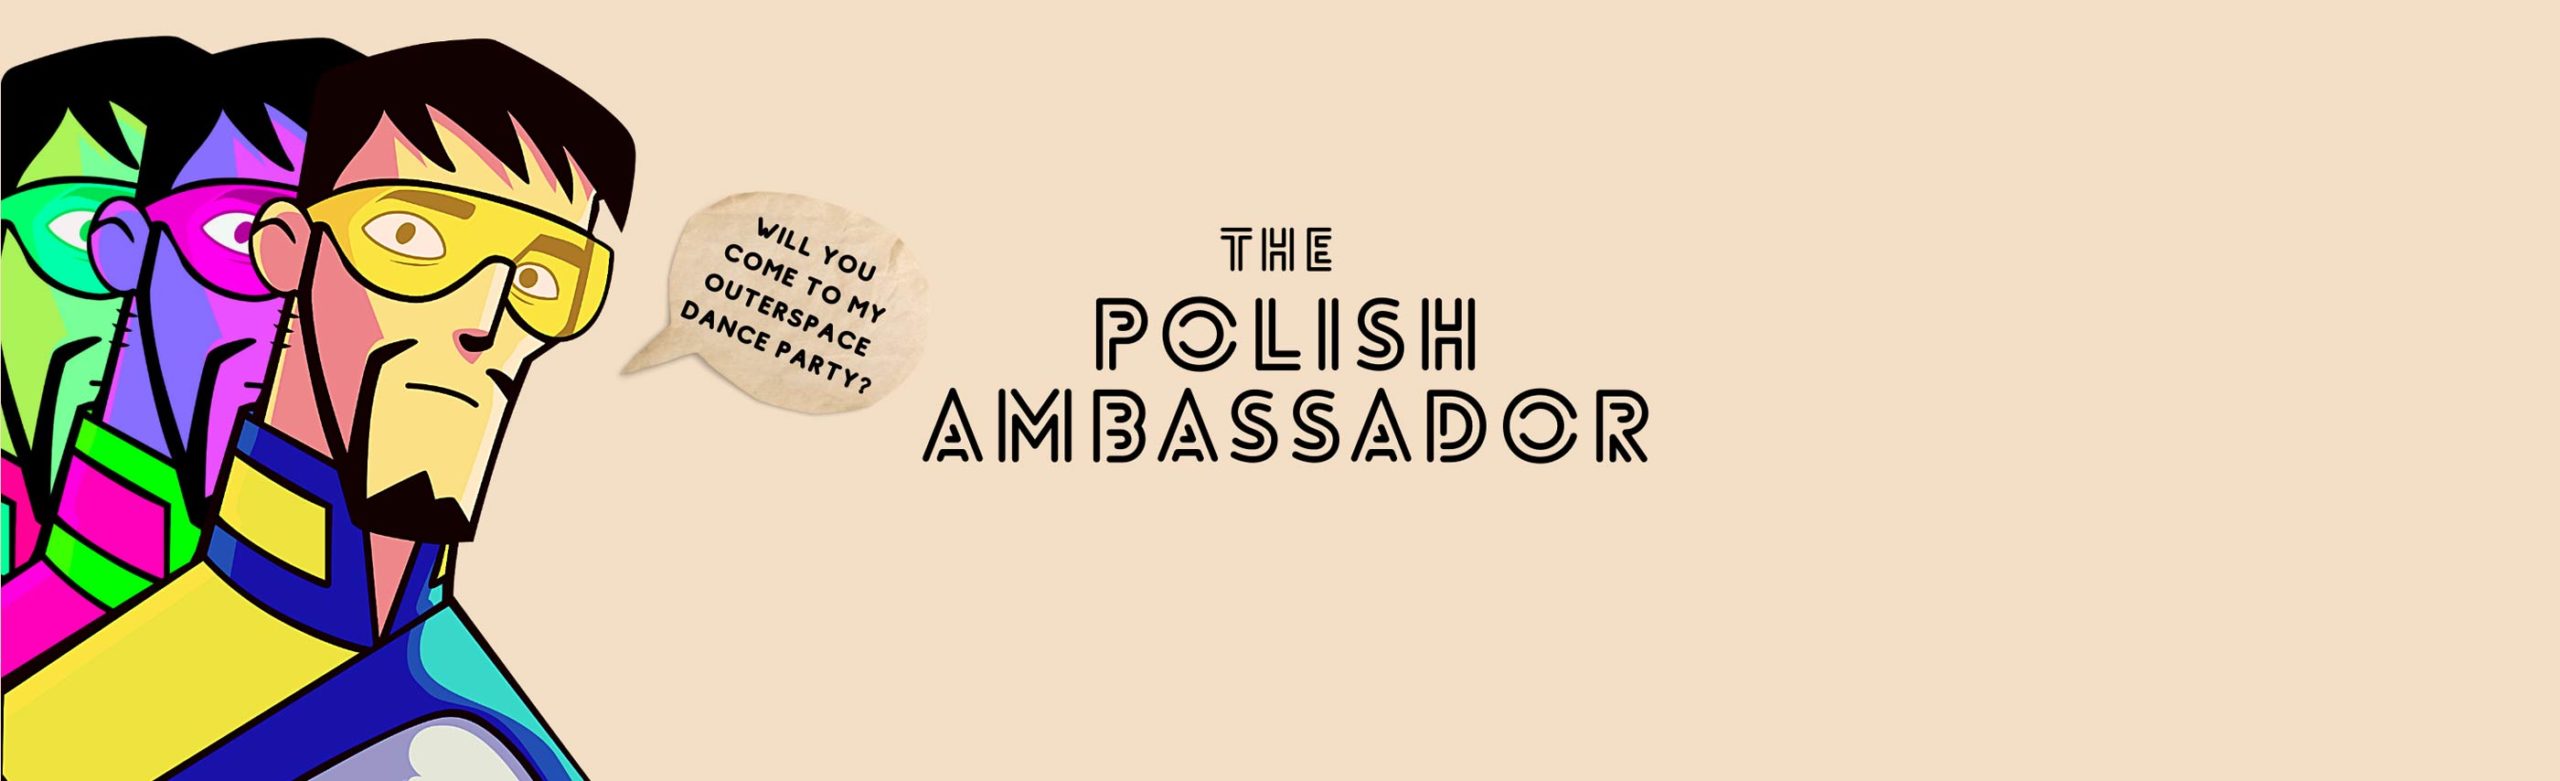 The Polish Ambassador Confirms Shows in Missoula and Bozeman Image